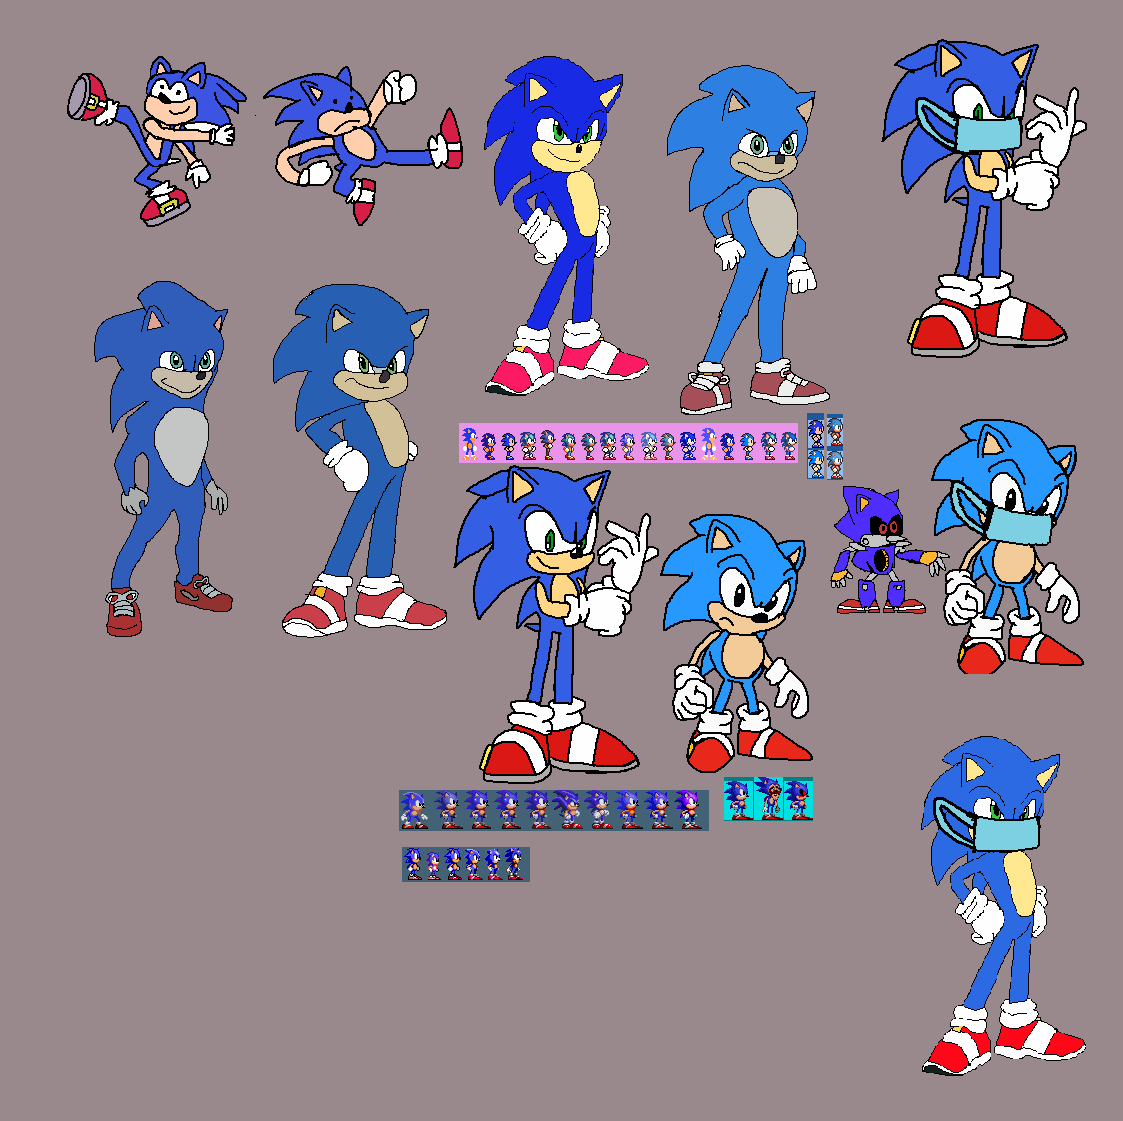 Drawing Sonic 1 Sonic by Abbysek on DeviantArt